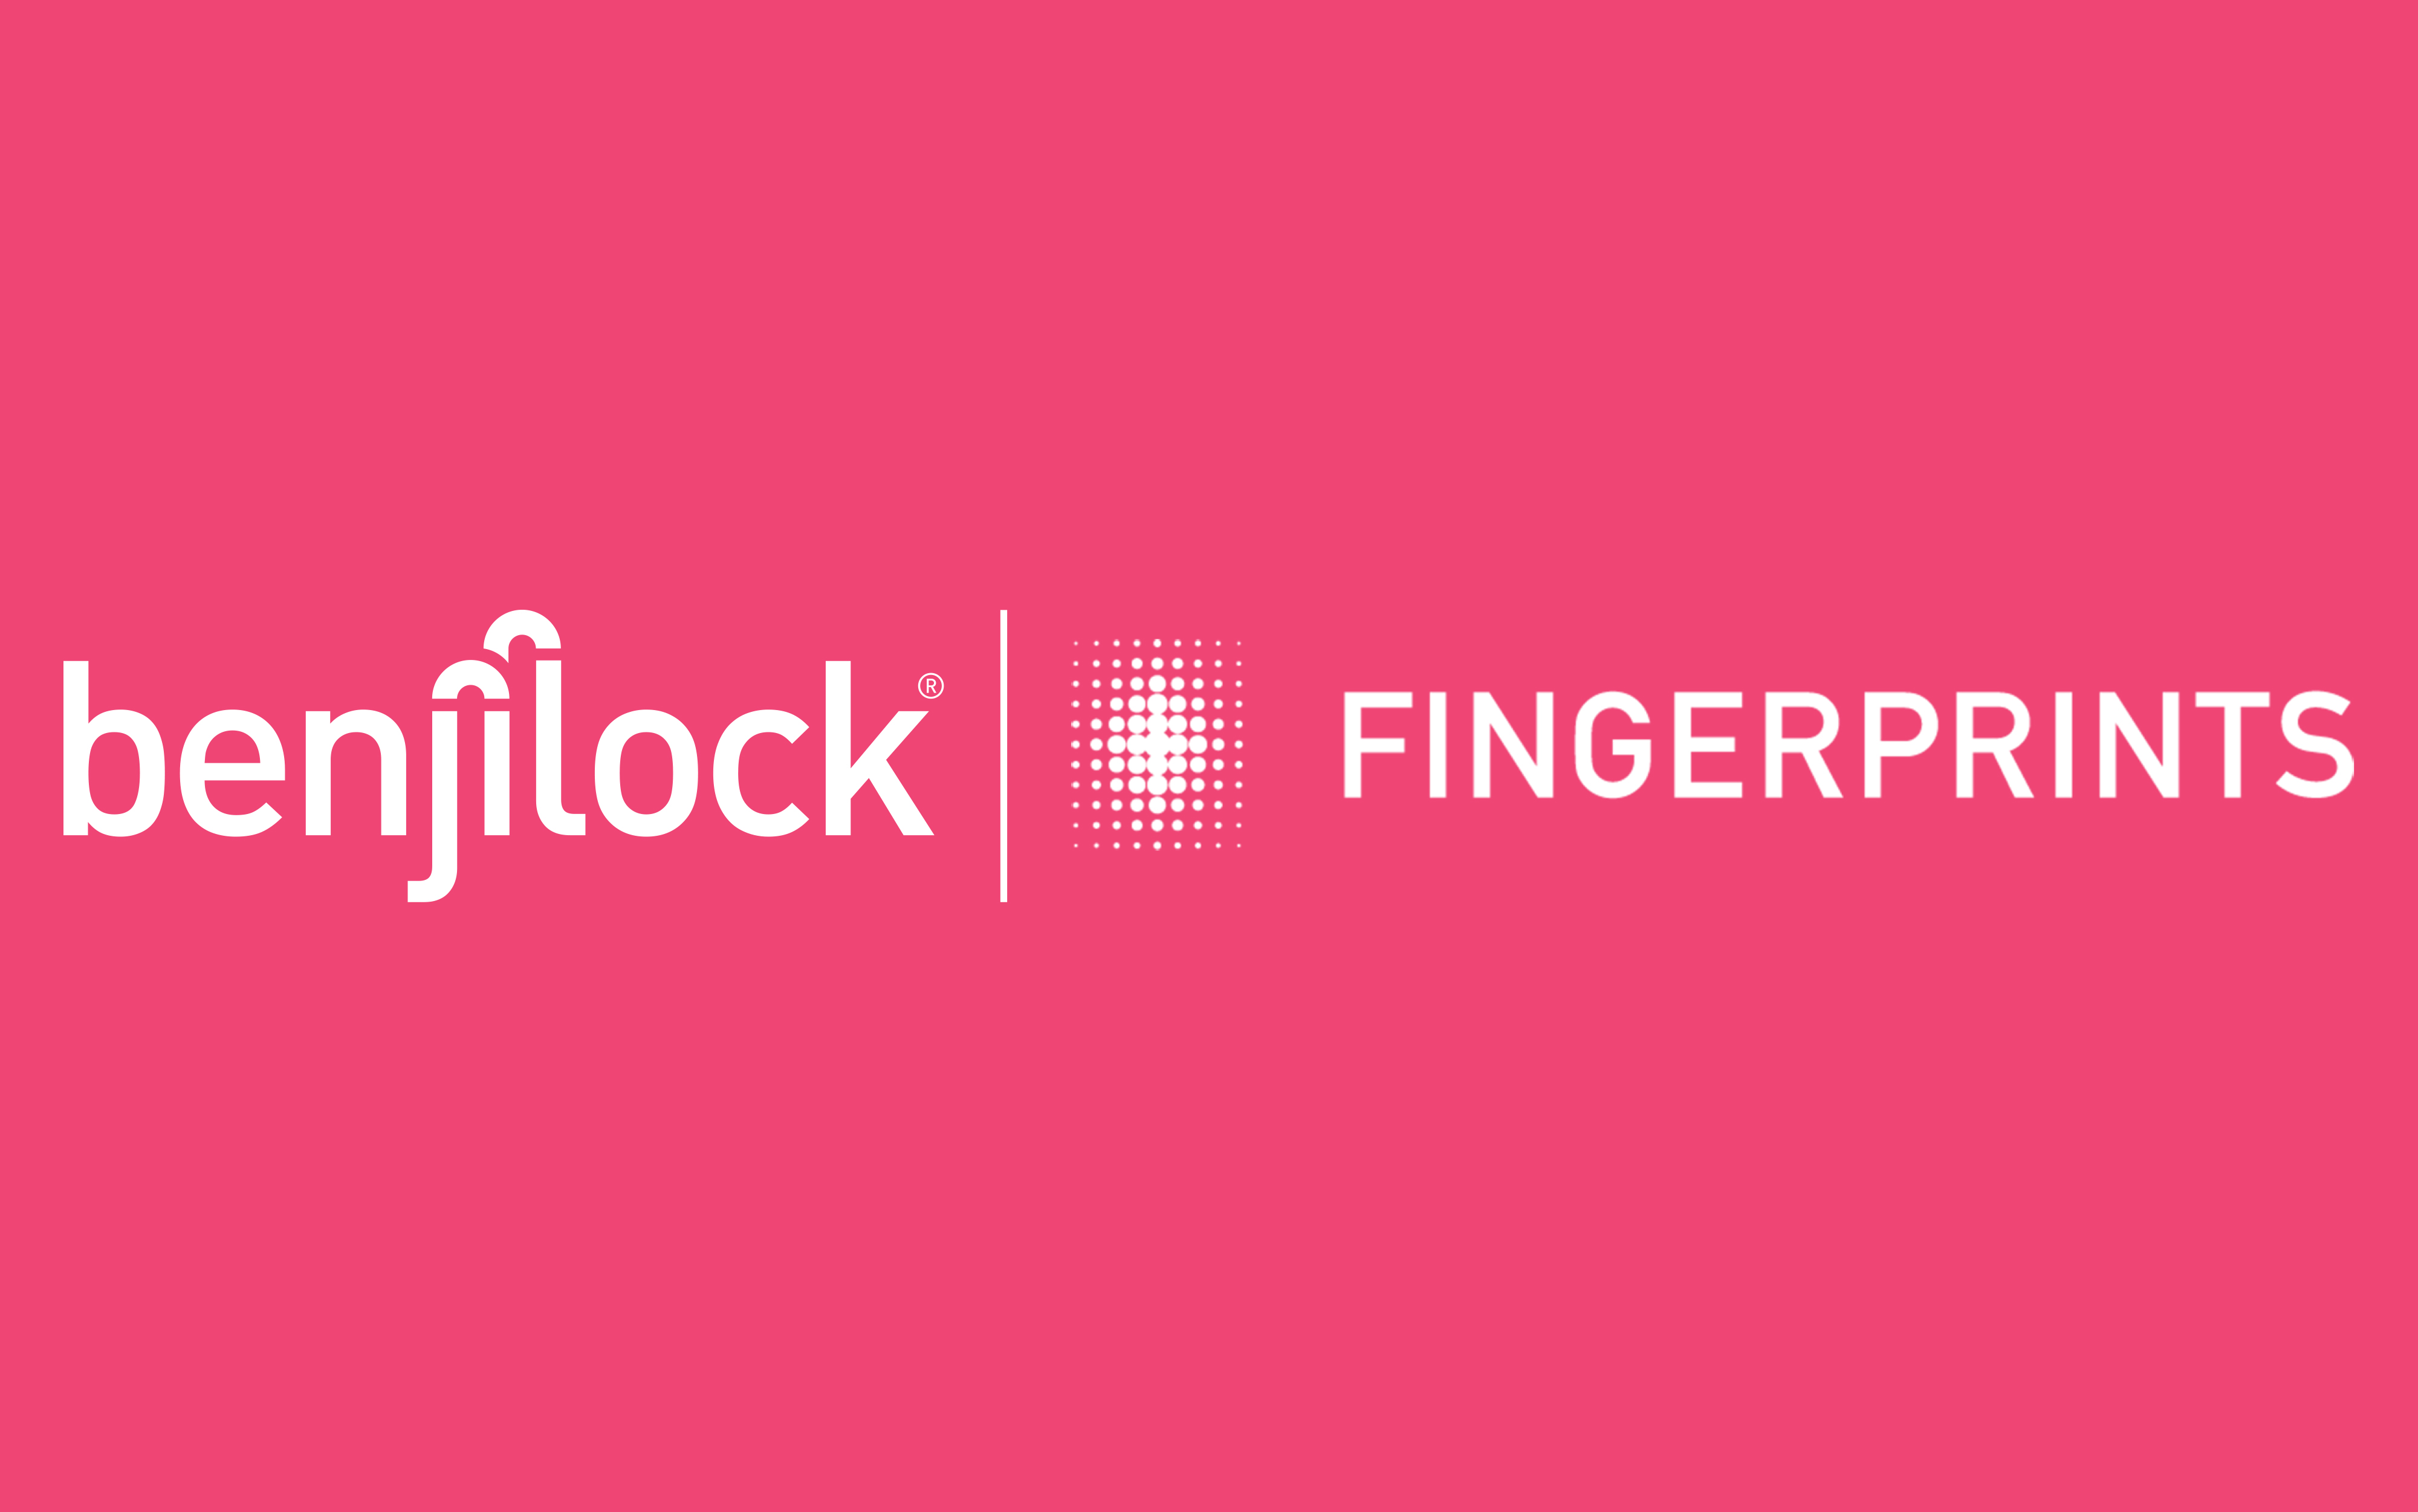 Fingerprints and BenjiLock sign deal to advance biometric access locking  solutions